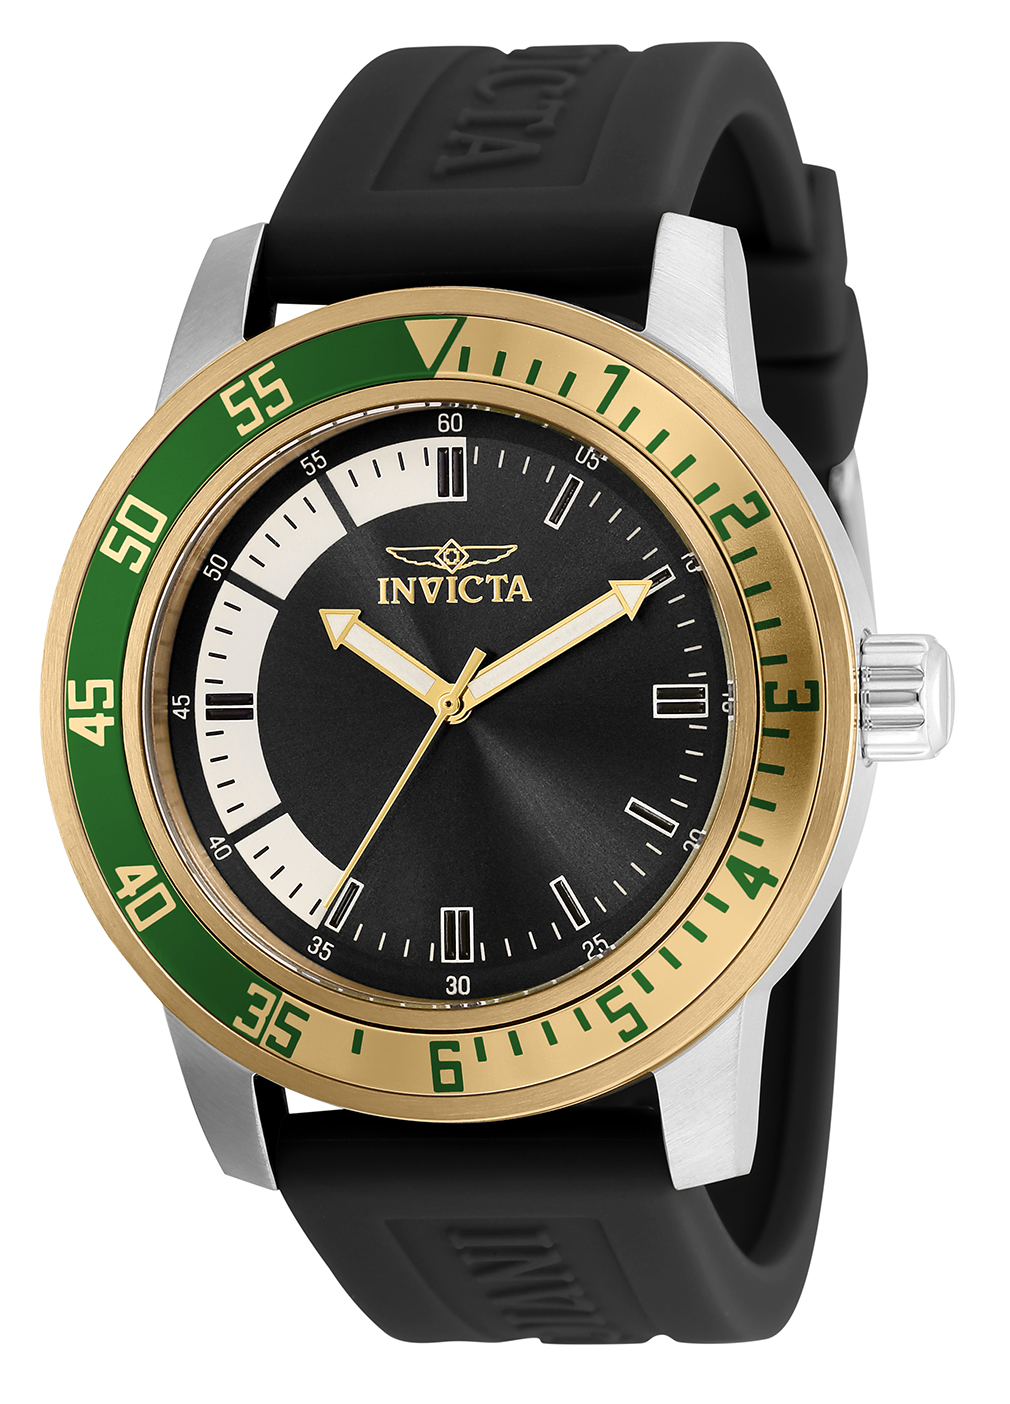 Invicta Specialty Men's Watch - 45mm, Black (35679)